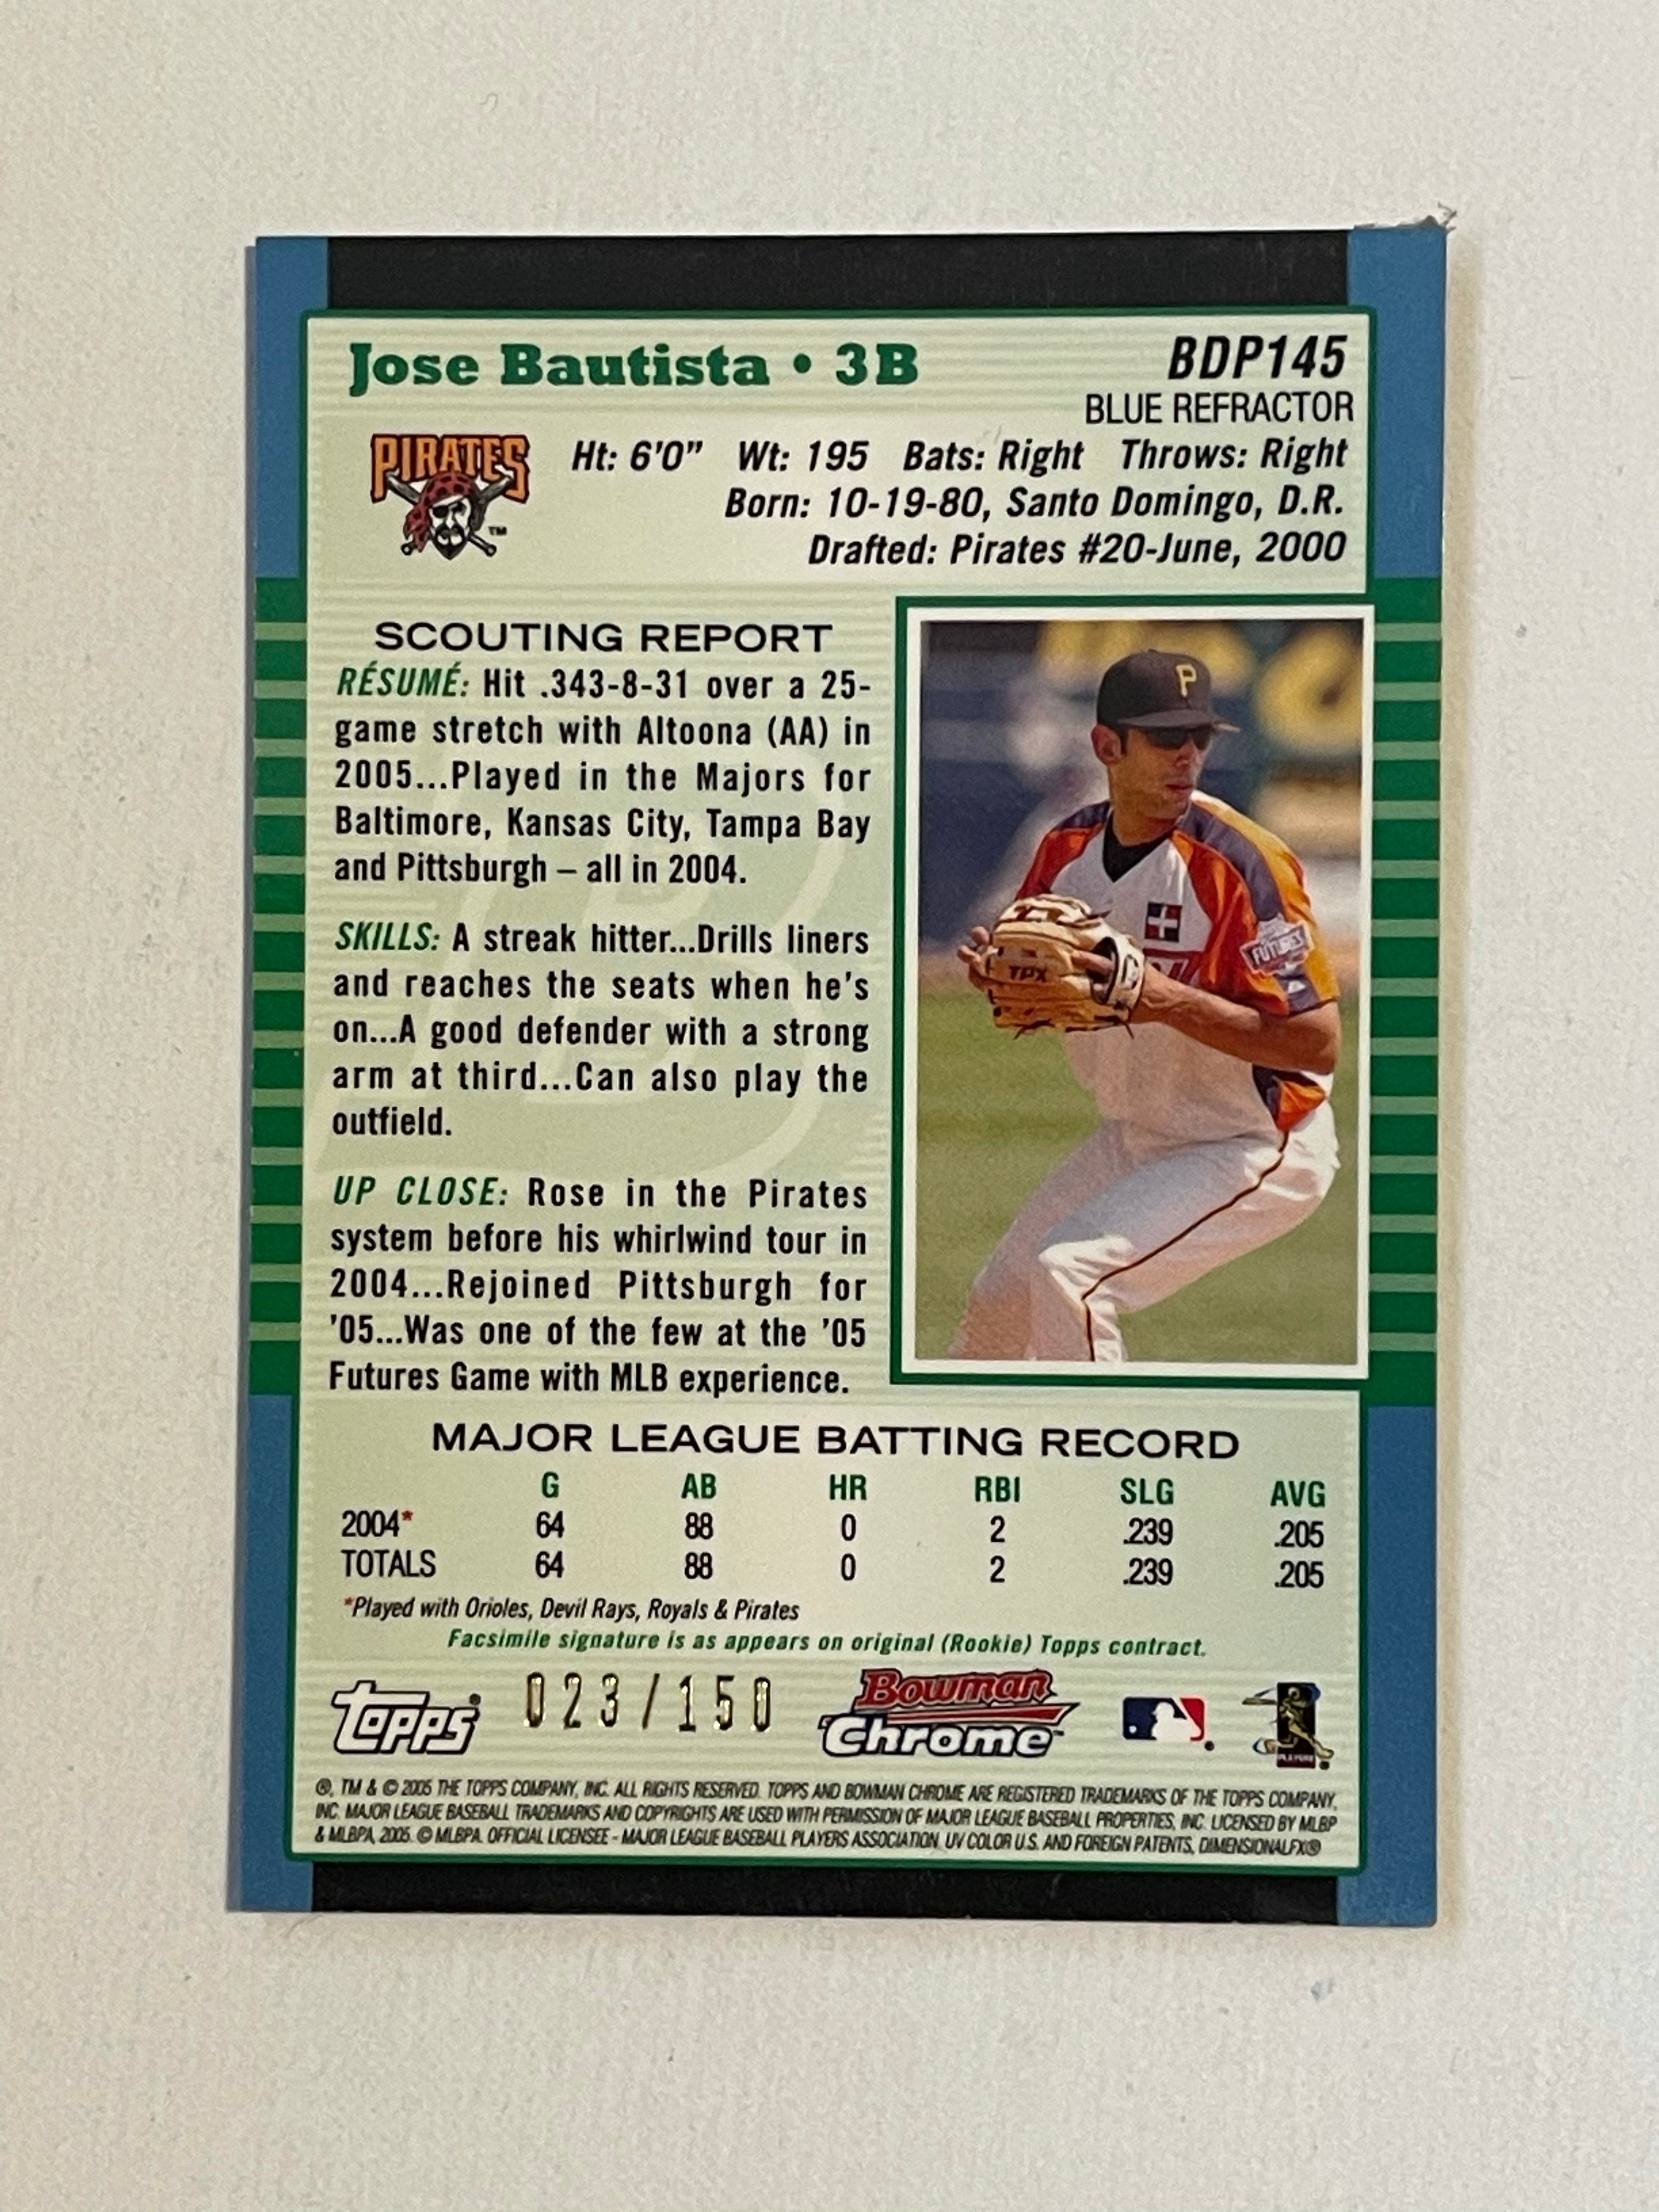 Jose Bautista Bowman Chrome Blue rookie refractor #23/150 baseball card 2005